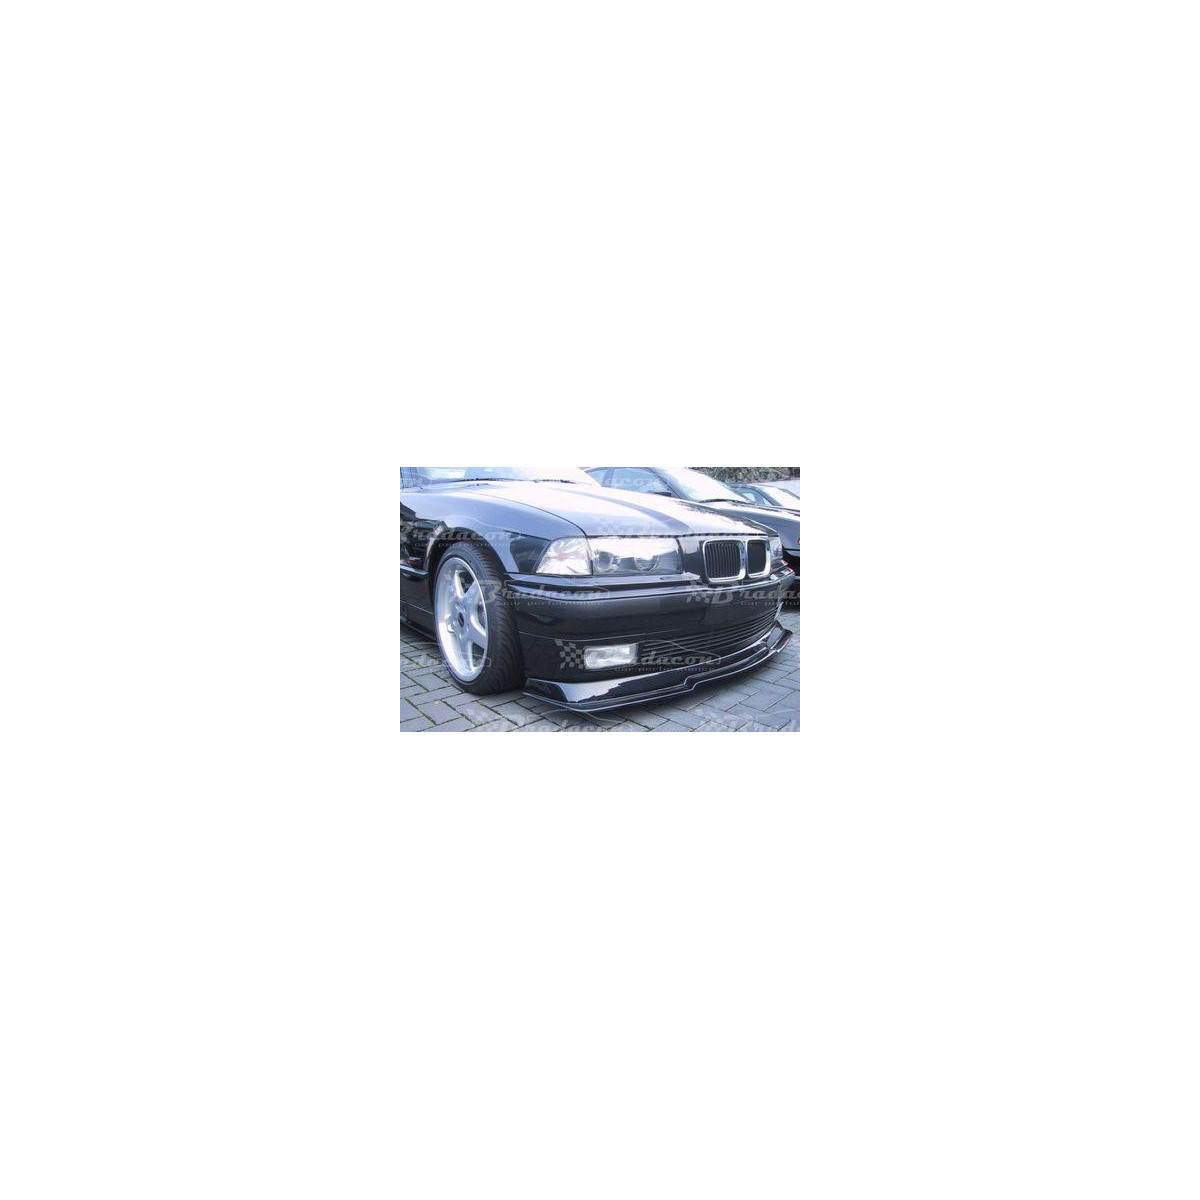 SPOILER ZDERZAKA PRZÓD WZOR M3 BMW E36 SERIA ABS